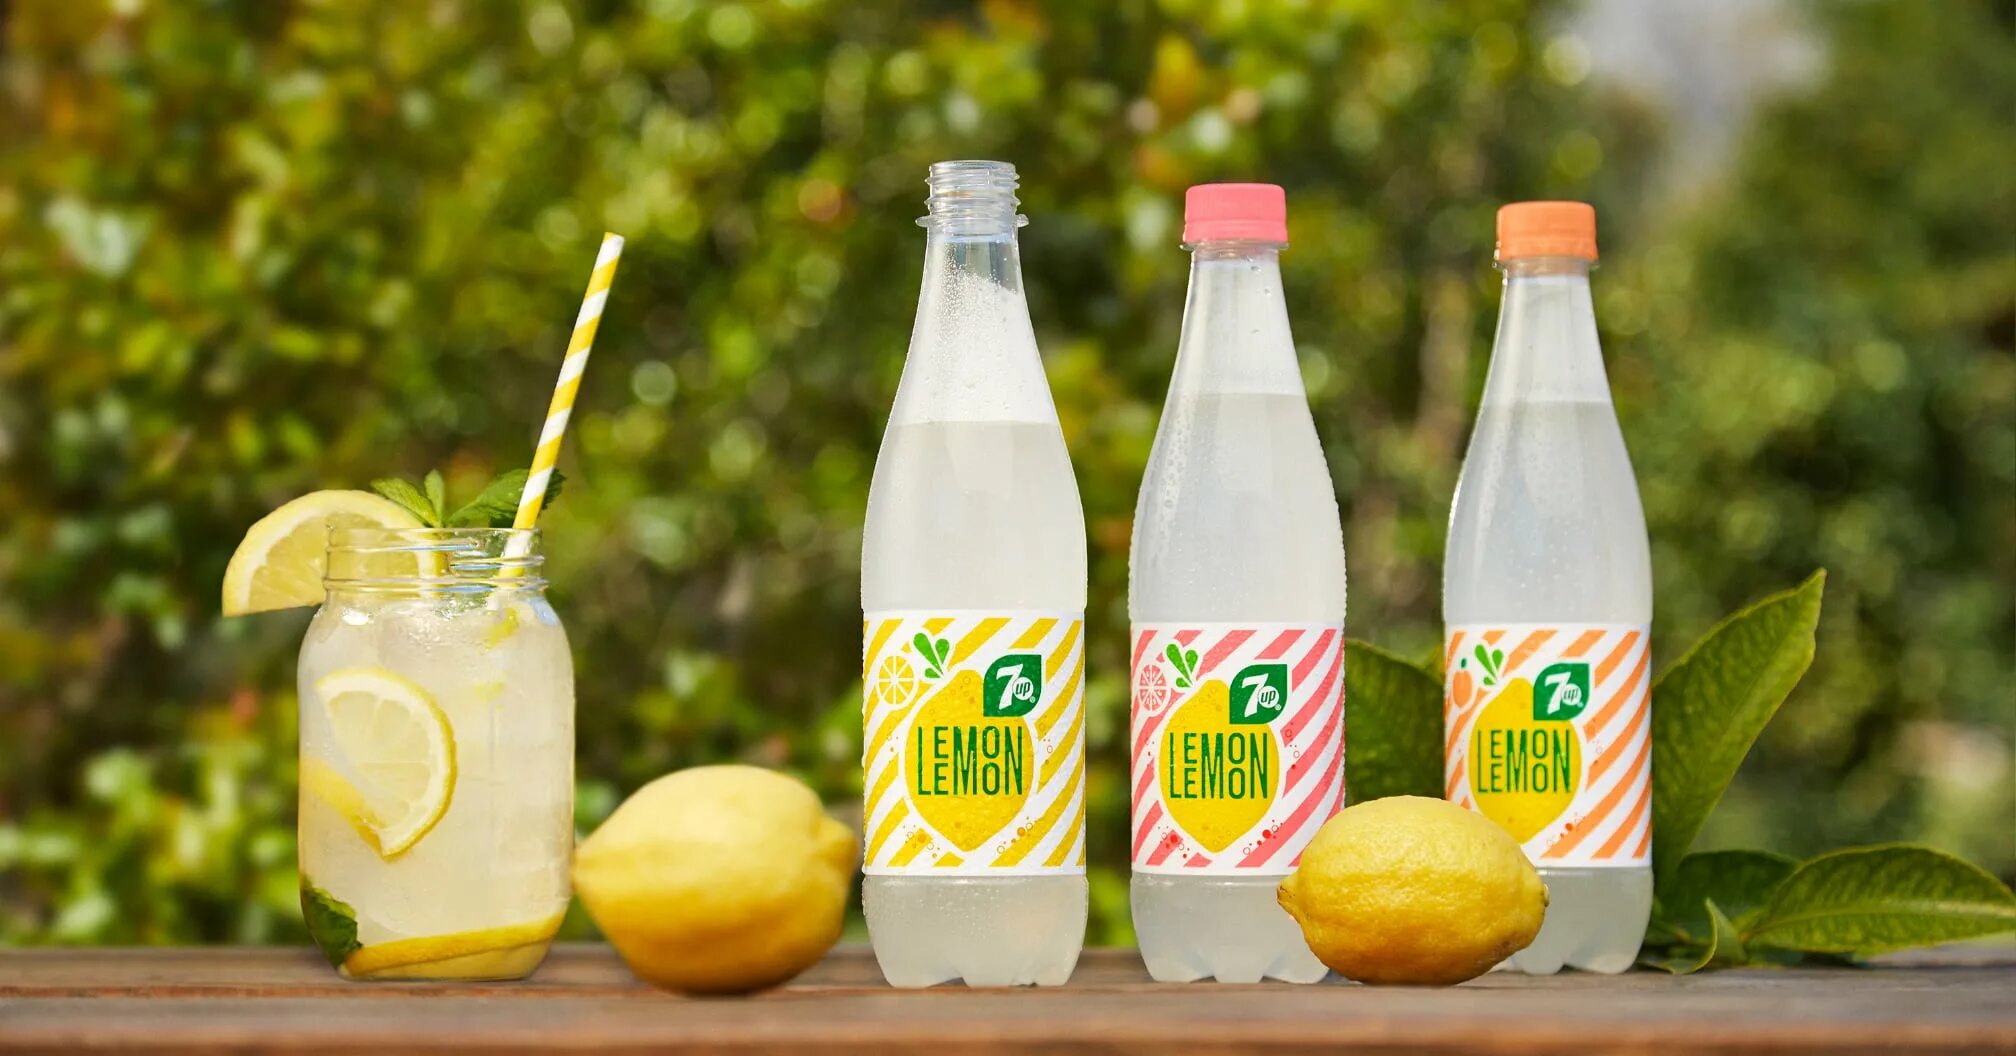 Лемон лид. Напиток Лемон Лемон. Реклама лимонада. Газировка с лаймом. Реклама Лемон Лемон.